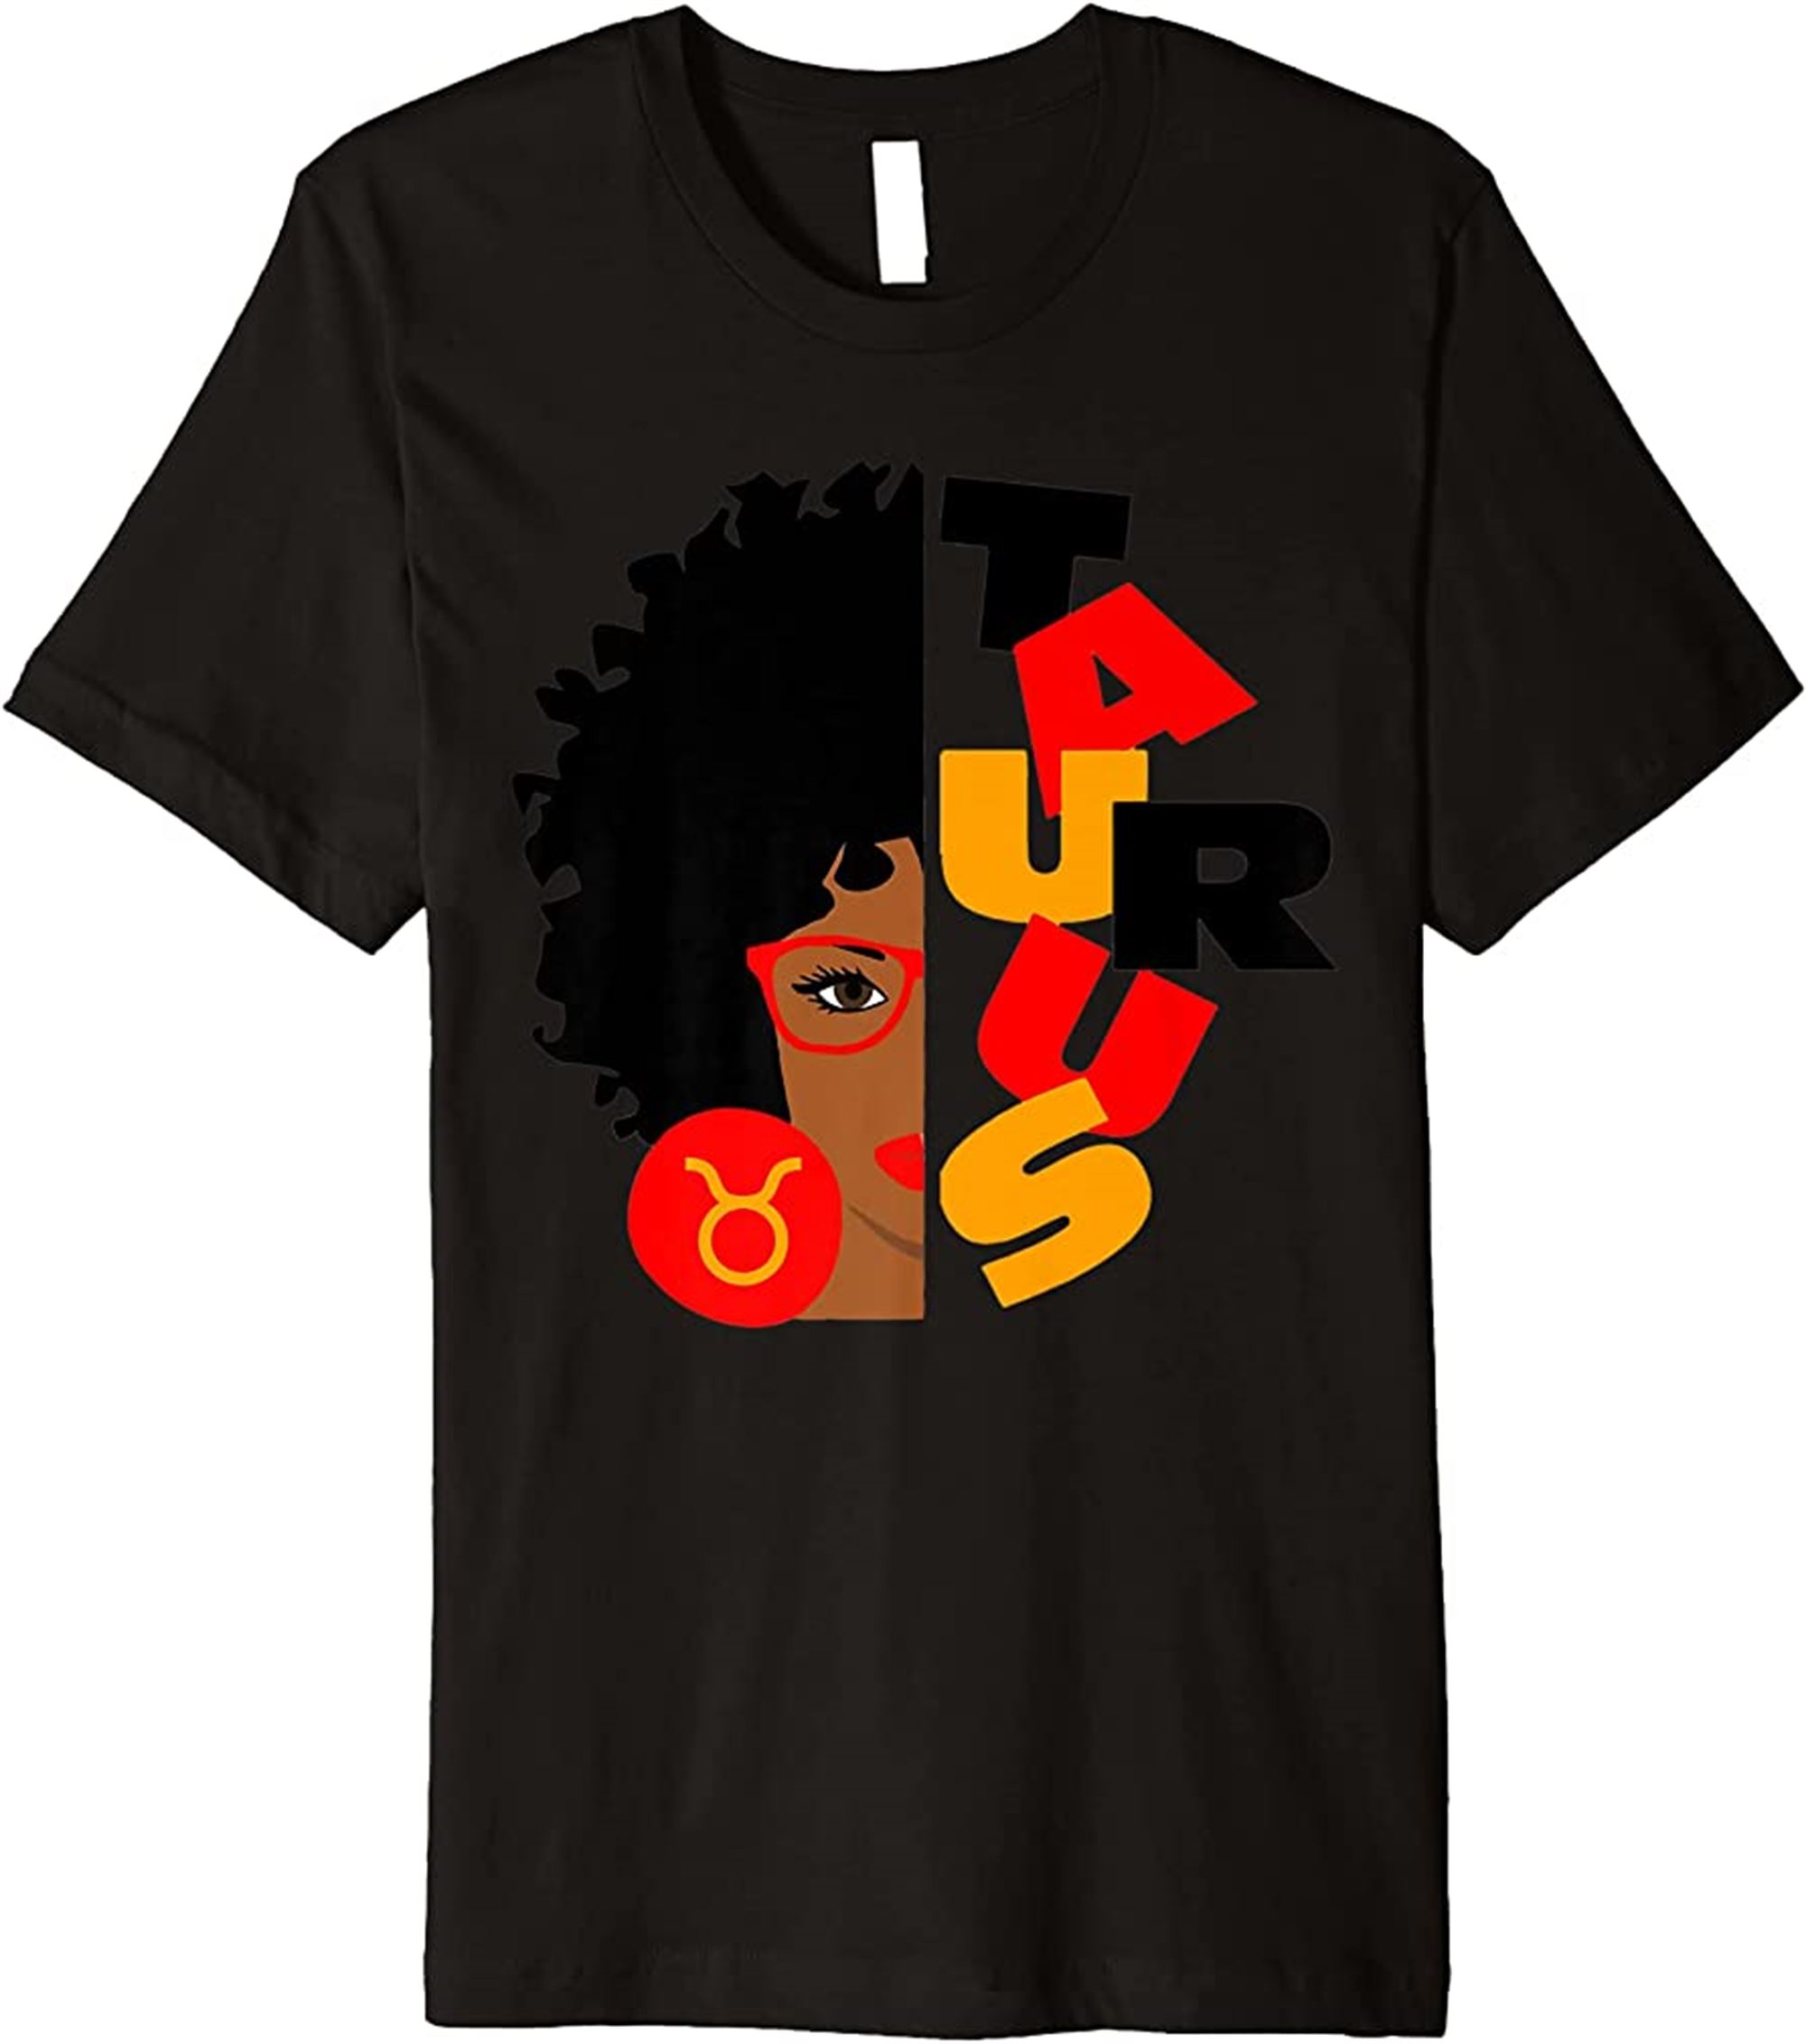 Taurus Girl Africa Girl Zodiac Signs Birthday Premium T-shirt Size Up To 5xl